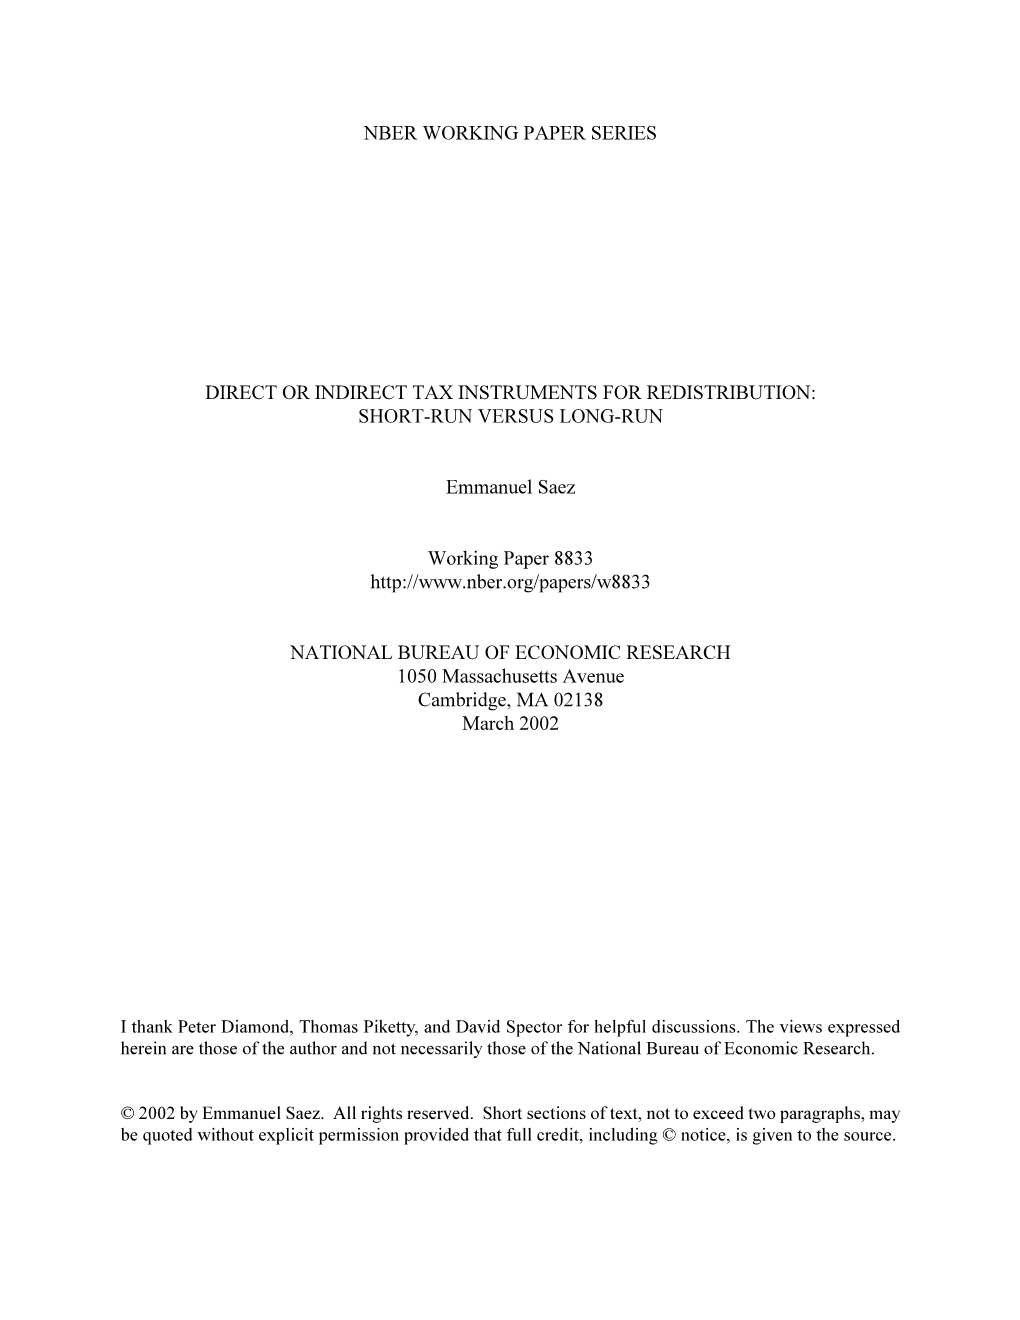 NBER WORKING PAPER SERIES DIRECT OR INDIRECT TAX INSTRUMENTS for REDISTRIBUTION: SHORT-RUN VERSUS LONG-RUN Emmanuel Saez Working